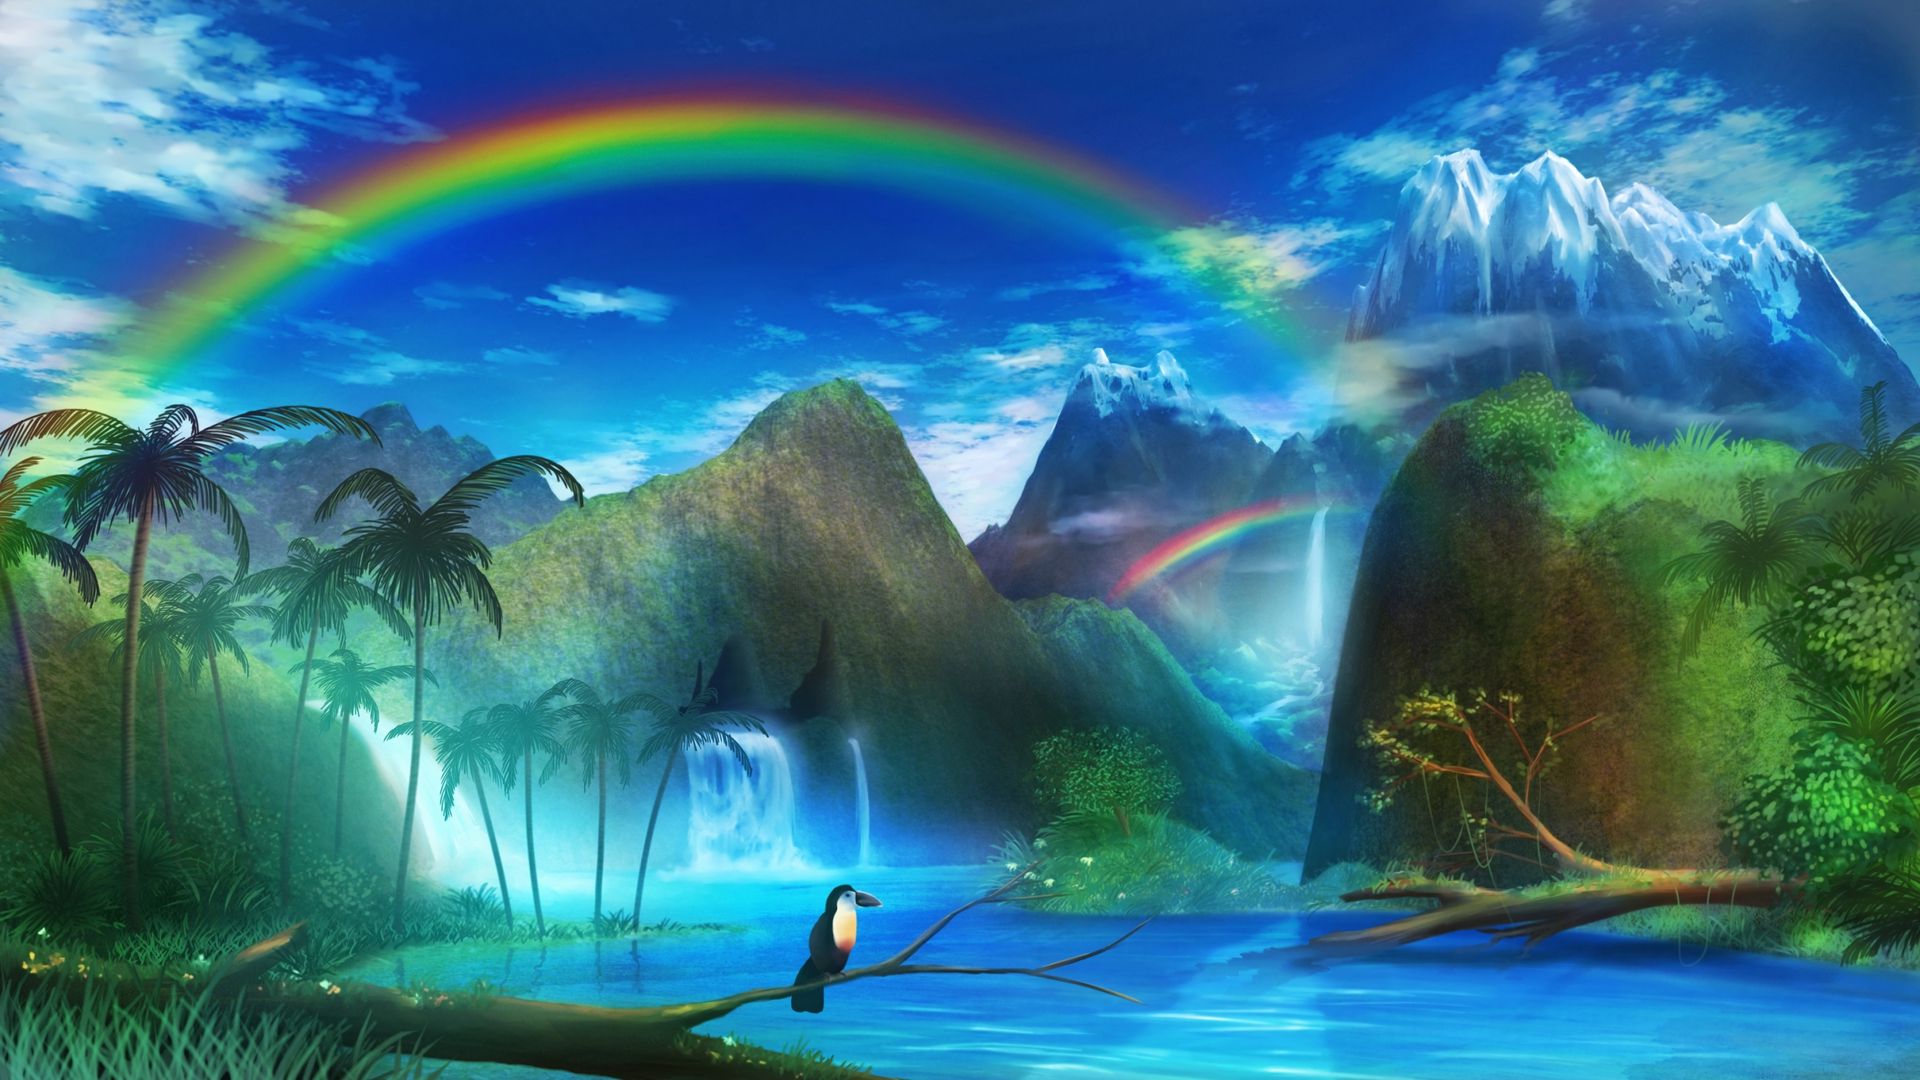 Download wallpaper 1920x1080 toucan, waterfall, rainbow, art full hd, hdtv,  fhd, 1080p hd background